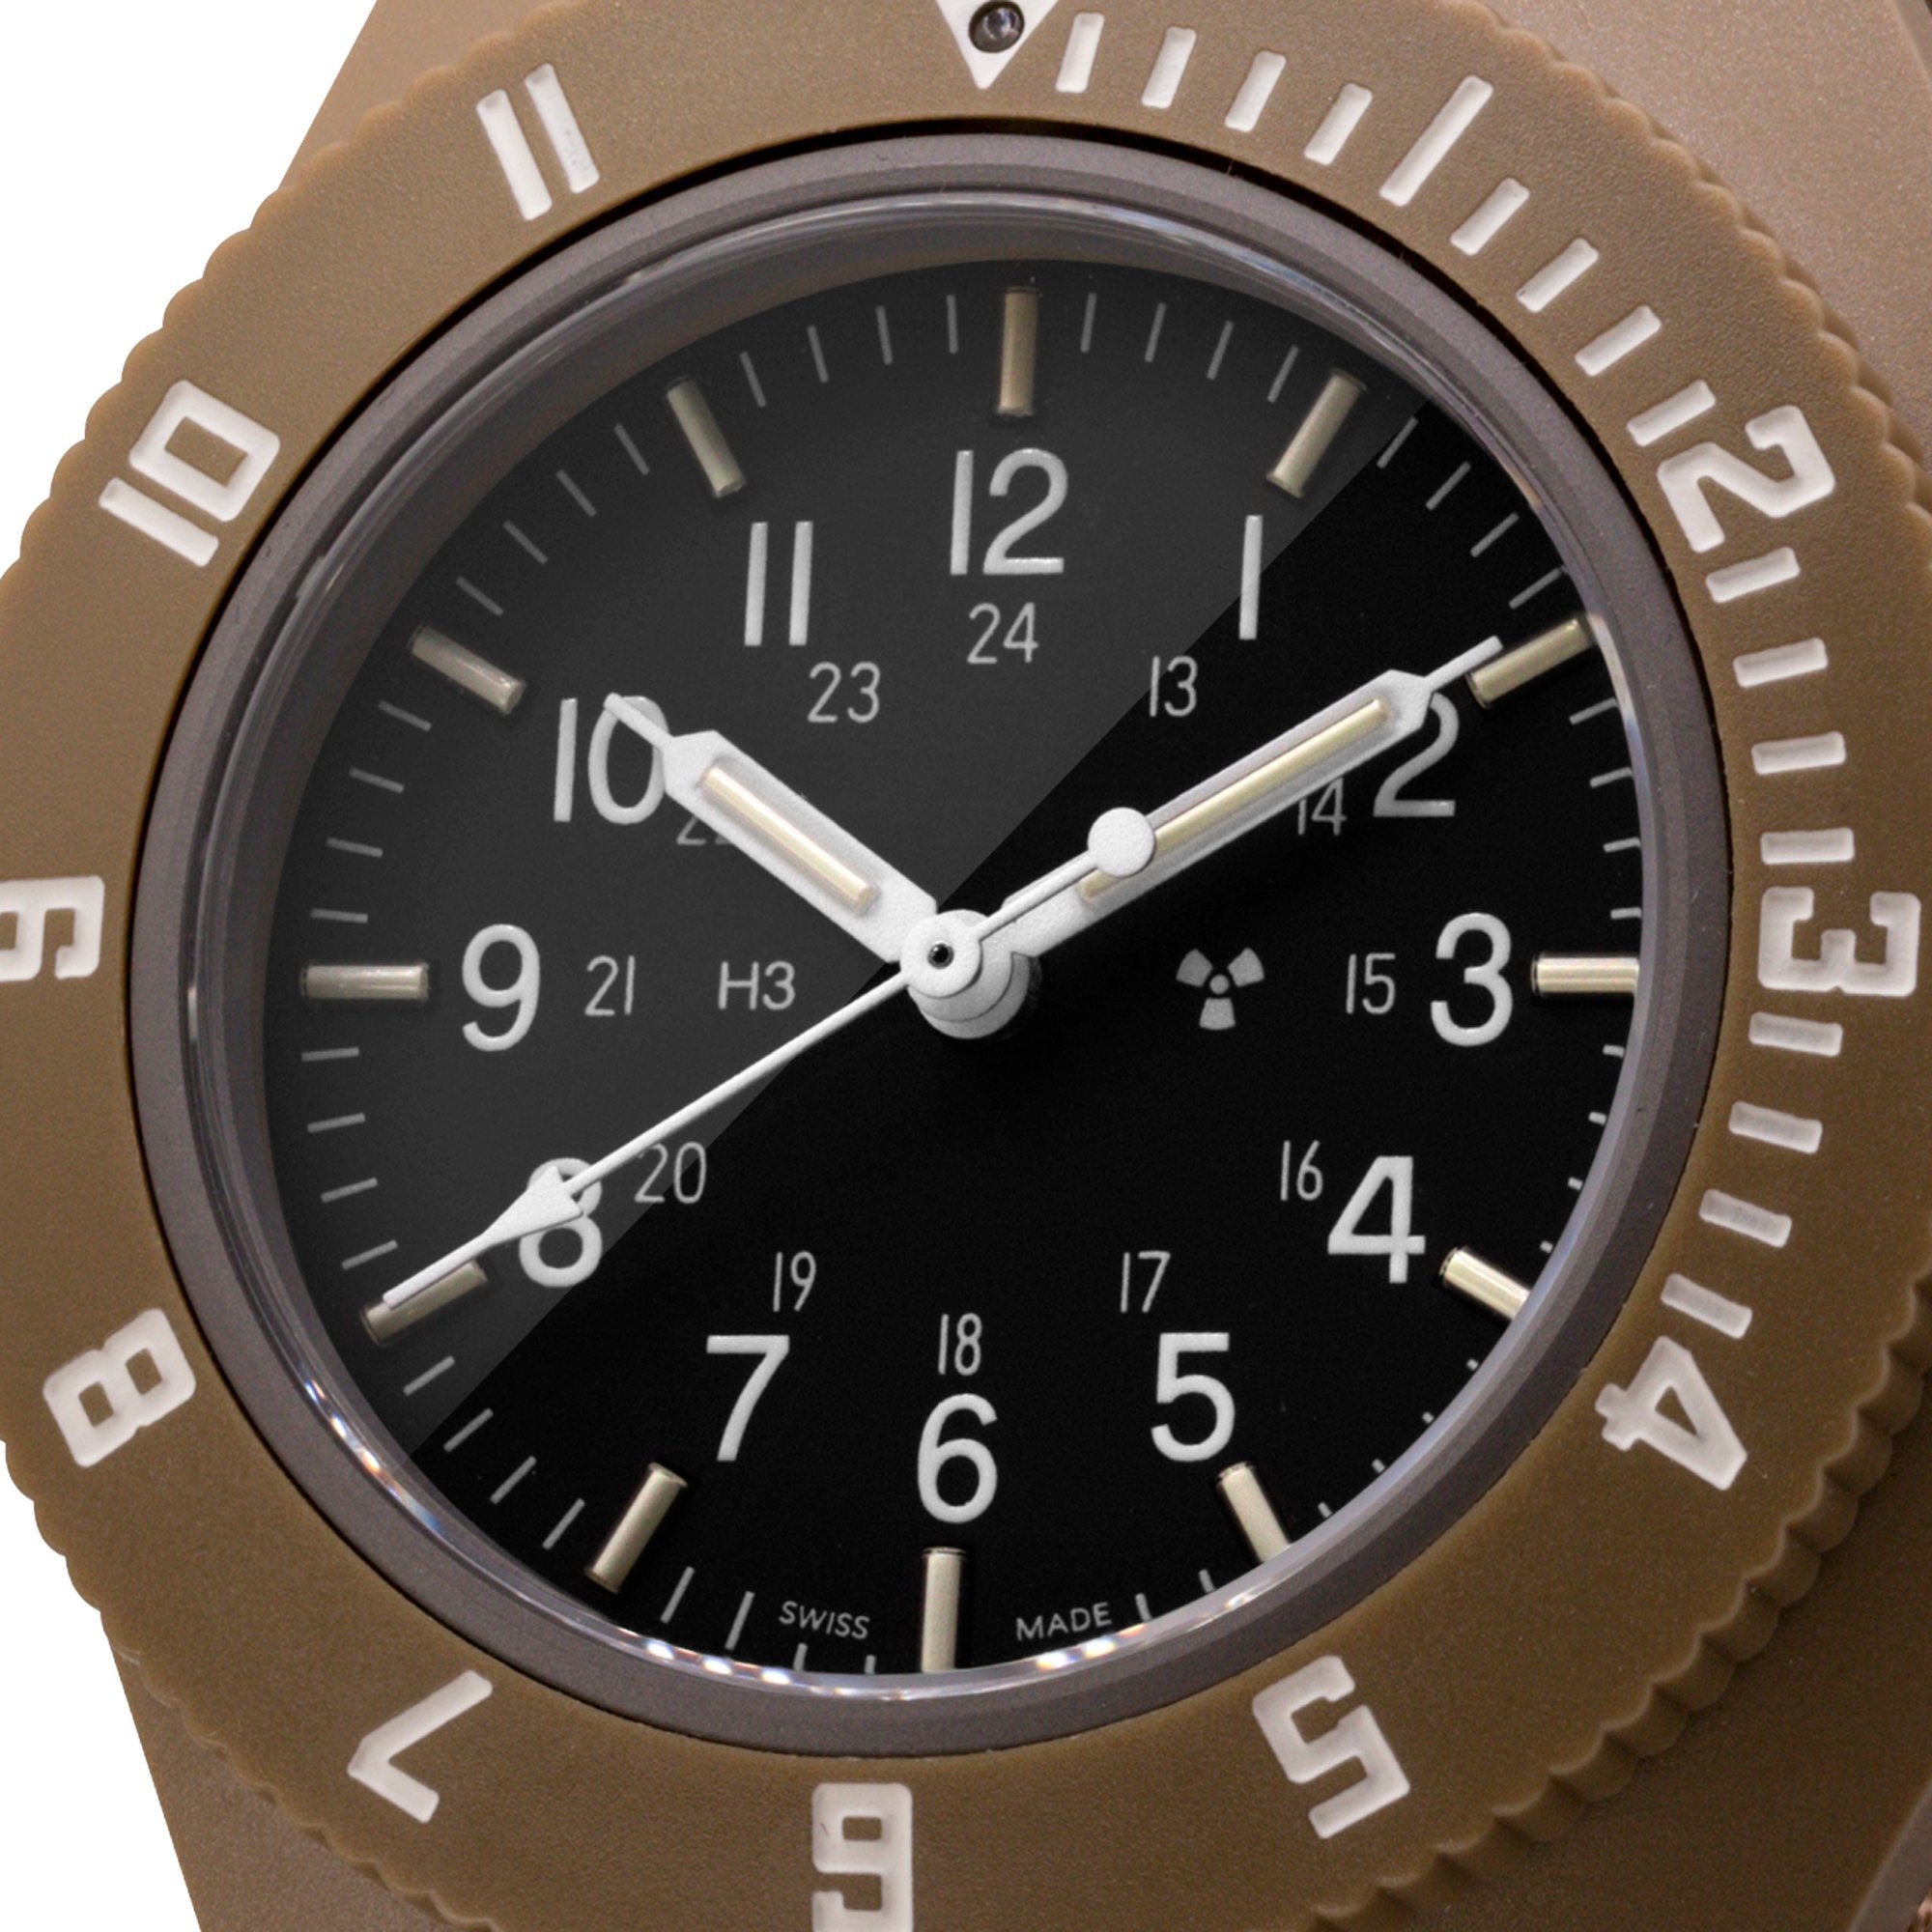 Nawigator pilota Desert Tan – sterylna tarcza – 41 mm – zegarek maratoński